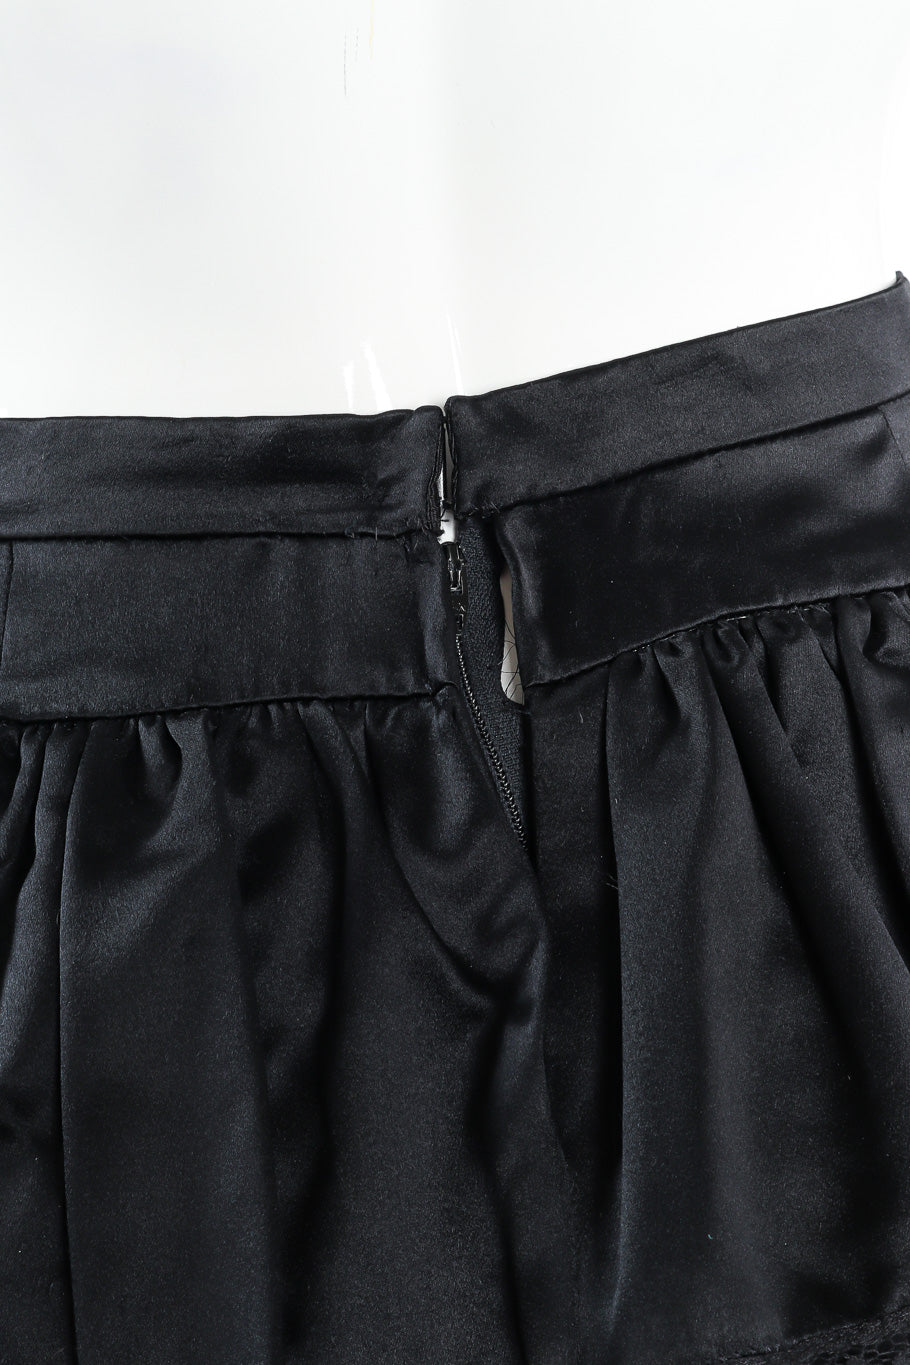 Valentino ruffle lace tiered skirt zipper seams detail @recessla